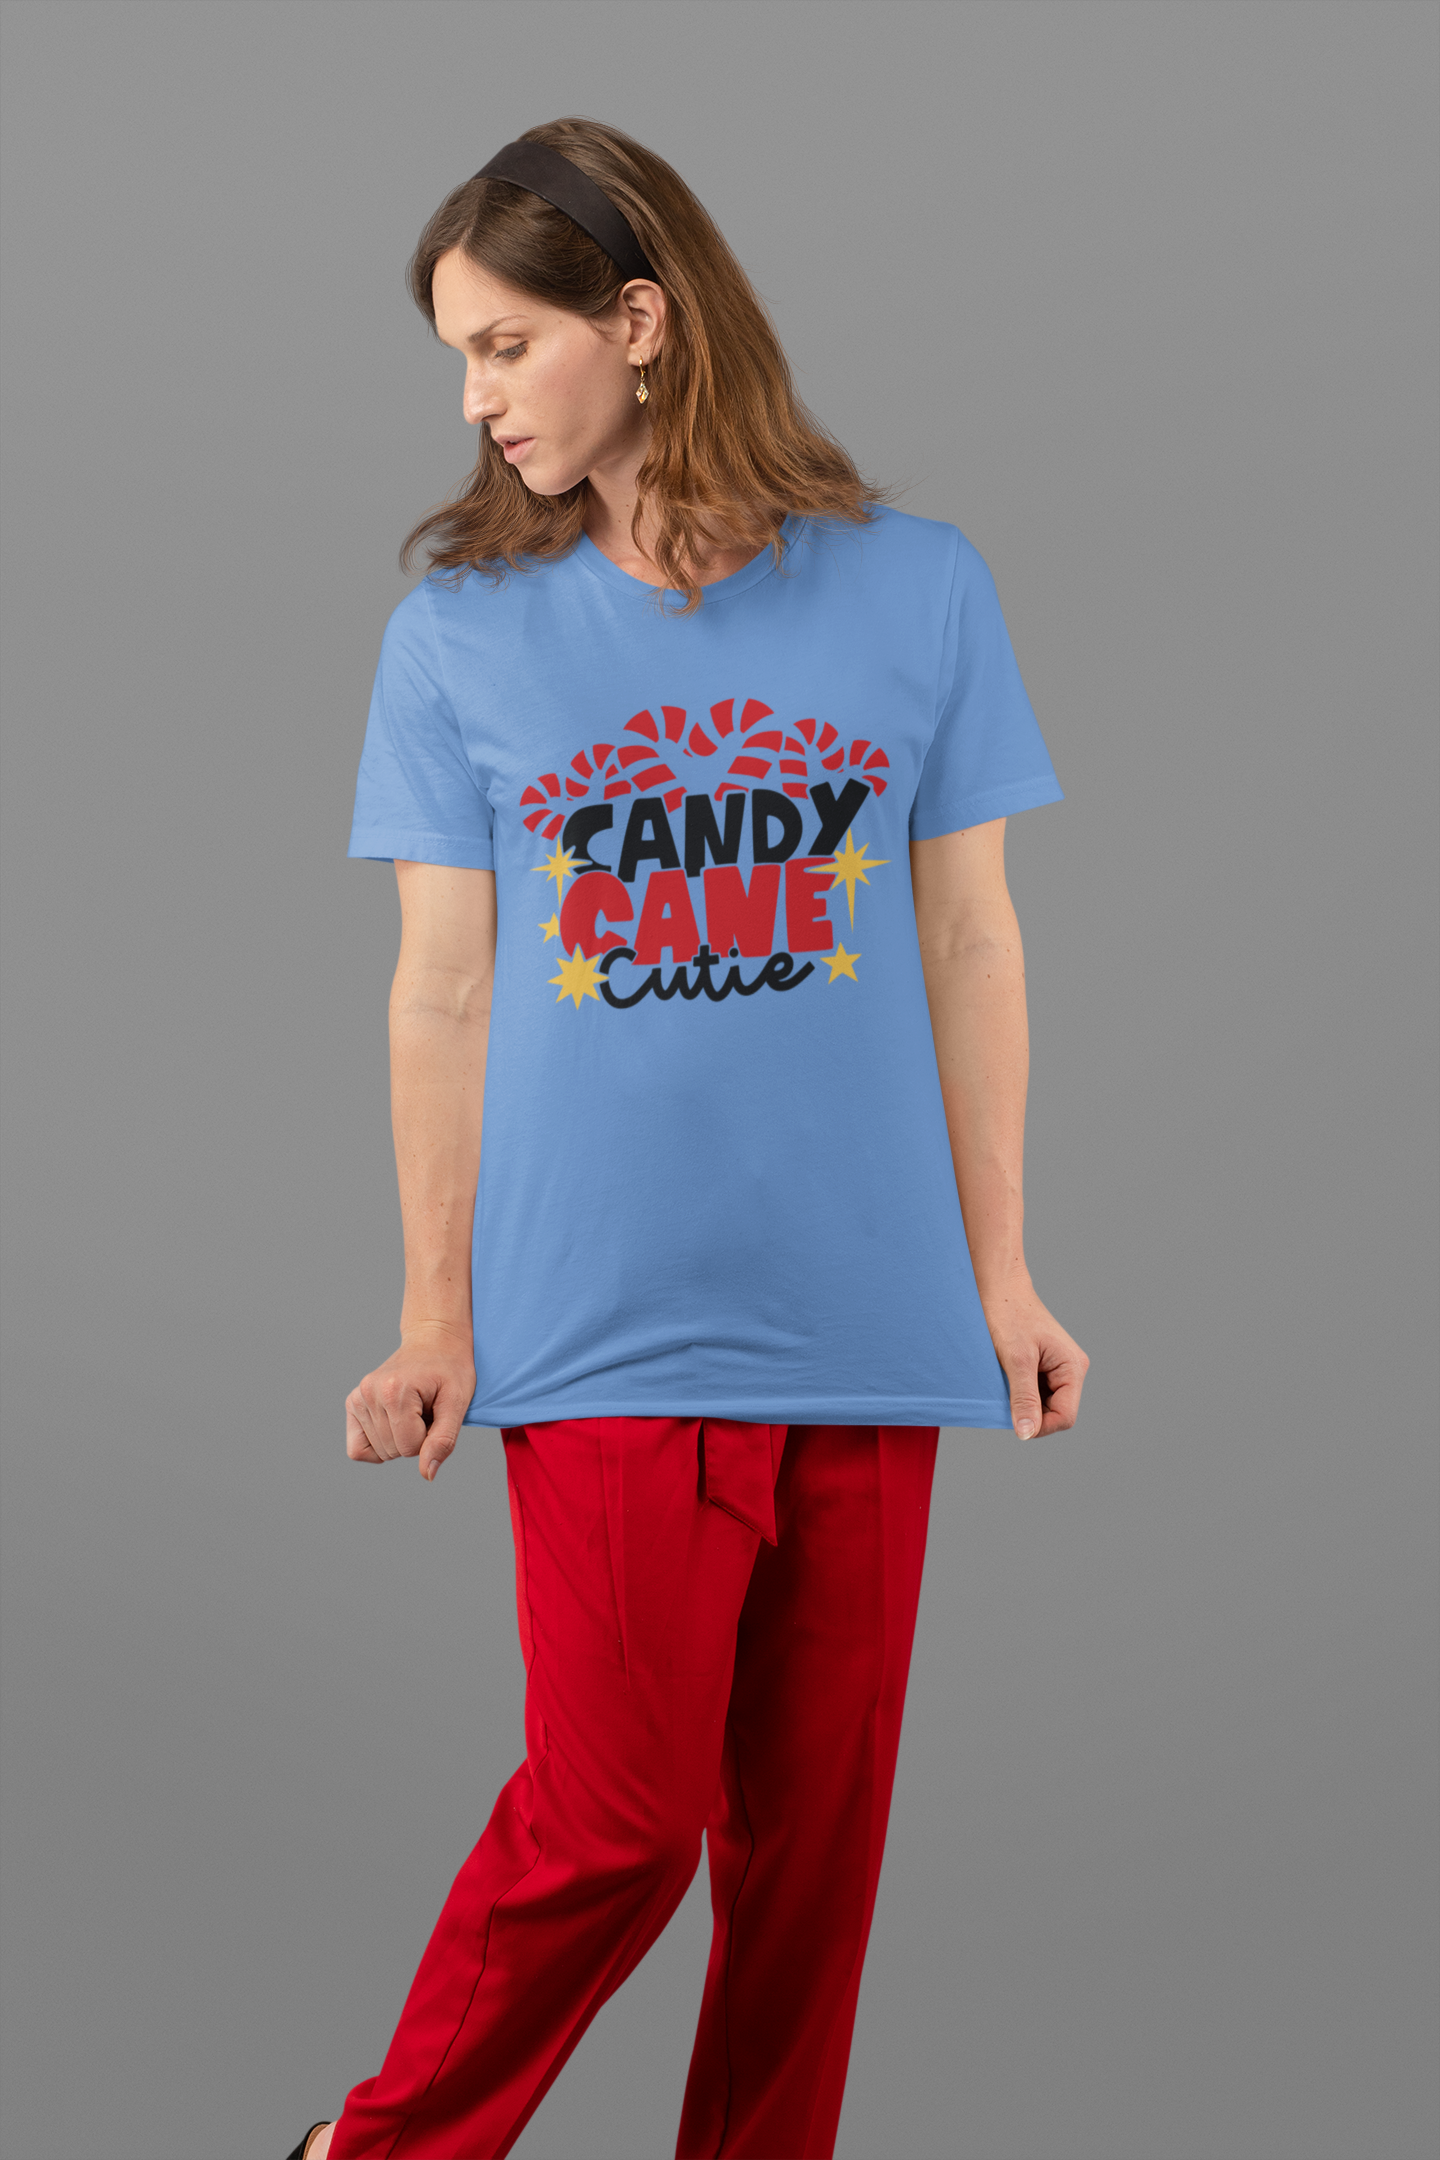 Candy Cane Cutie Unisex Garment-Dyed T-shirt